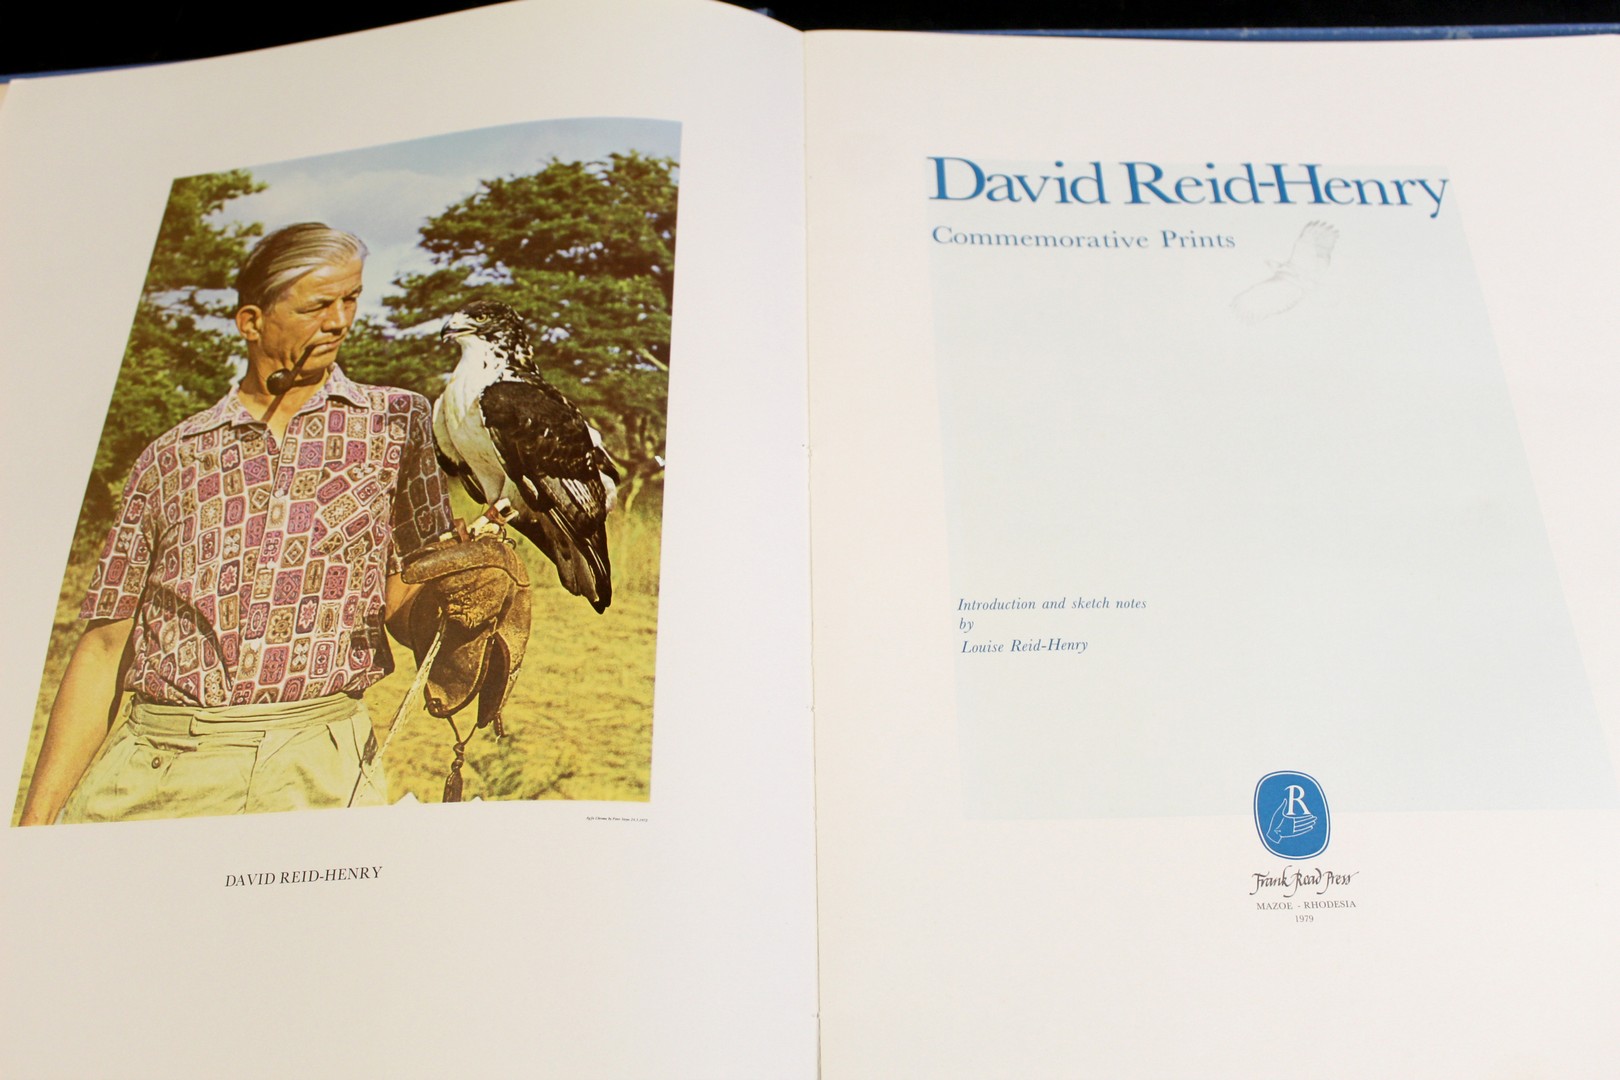 DAVID REID-HENRY: COMMEMORATIVE PRINTS, intro and sketch notes Louise Reid-Henry, Mazoe Rhodesia,